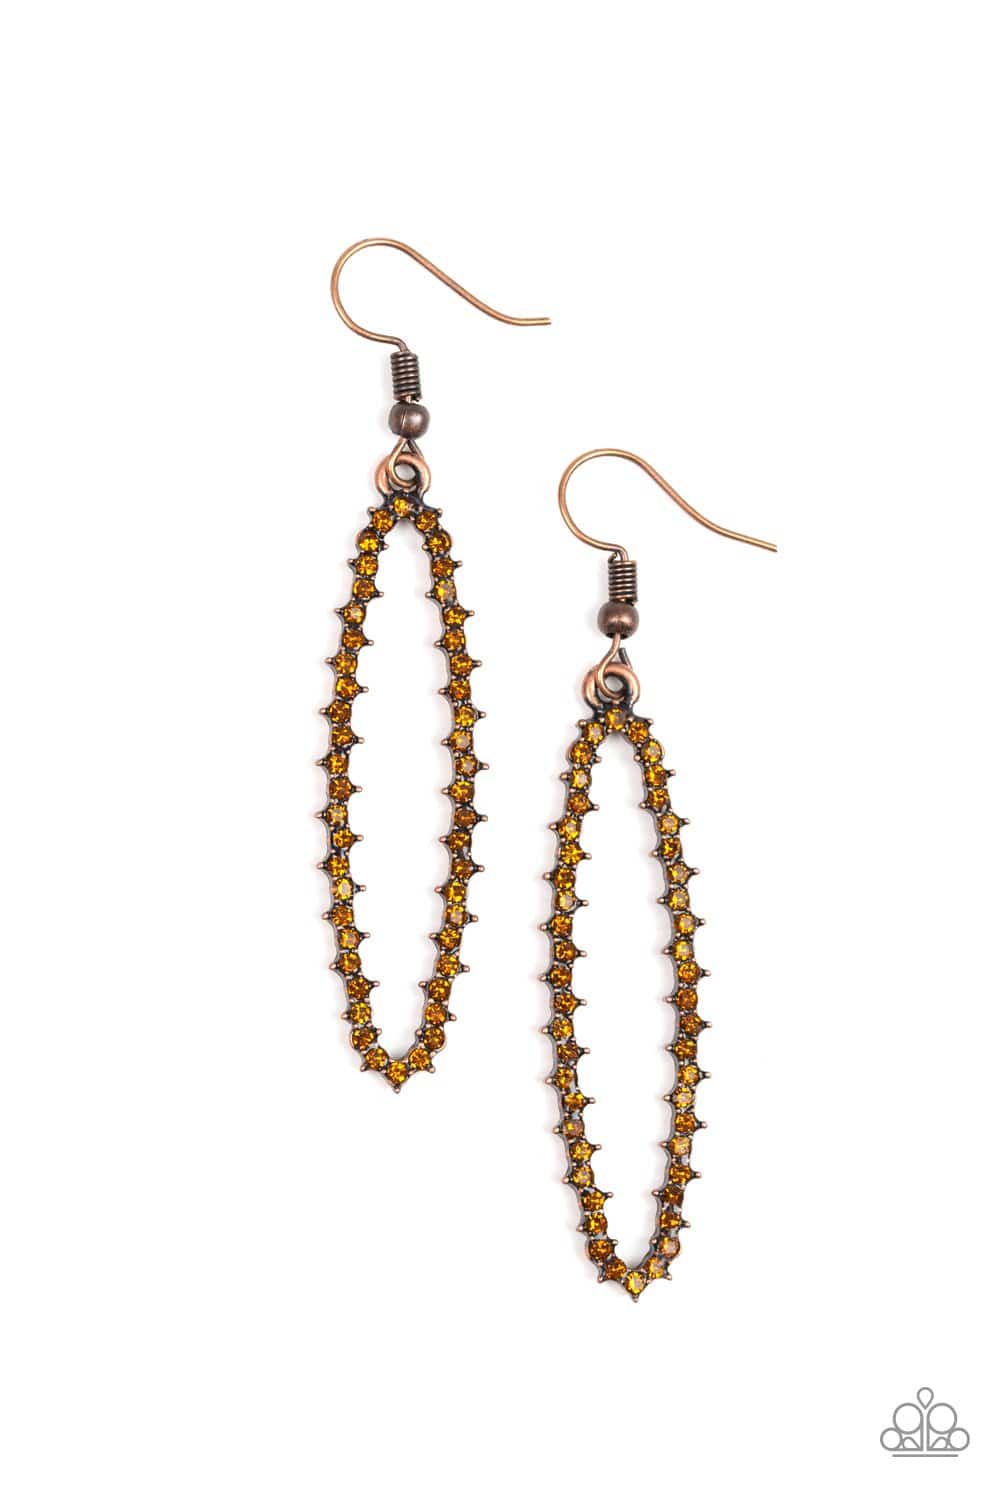 A Little GLOW-mance - Copper Rhinestone Earrings - Paparazzi Accessories - GlaMarous Titi Jewels